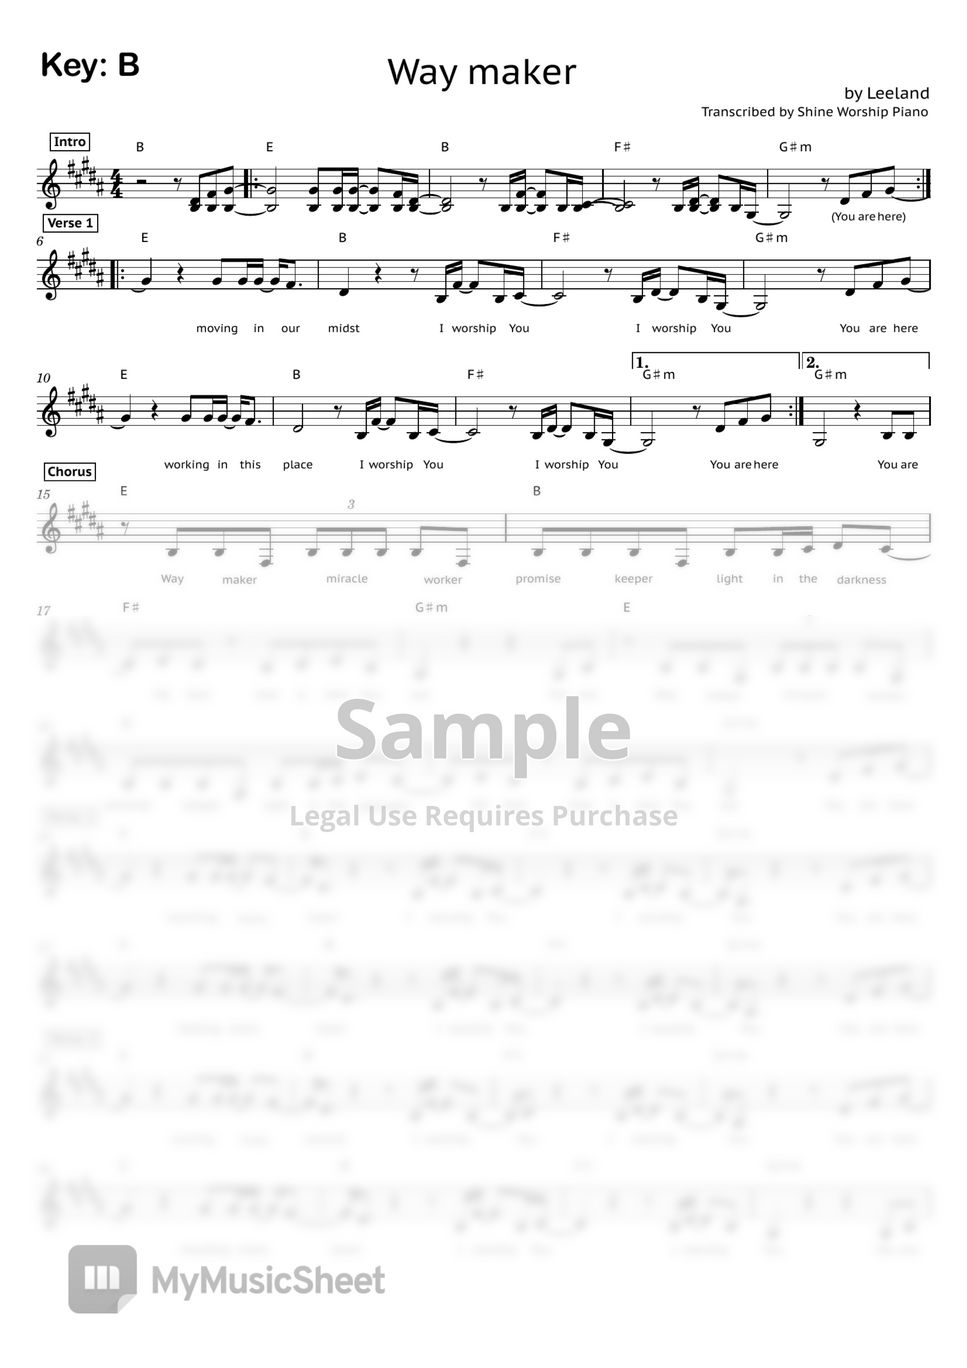 Sinach - Way maker (by Leeeland) Sheets by Shine Worship Piano